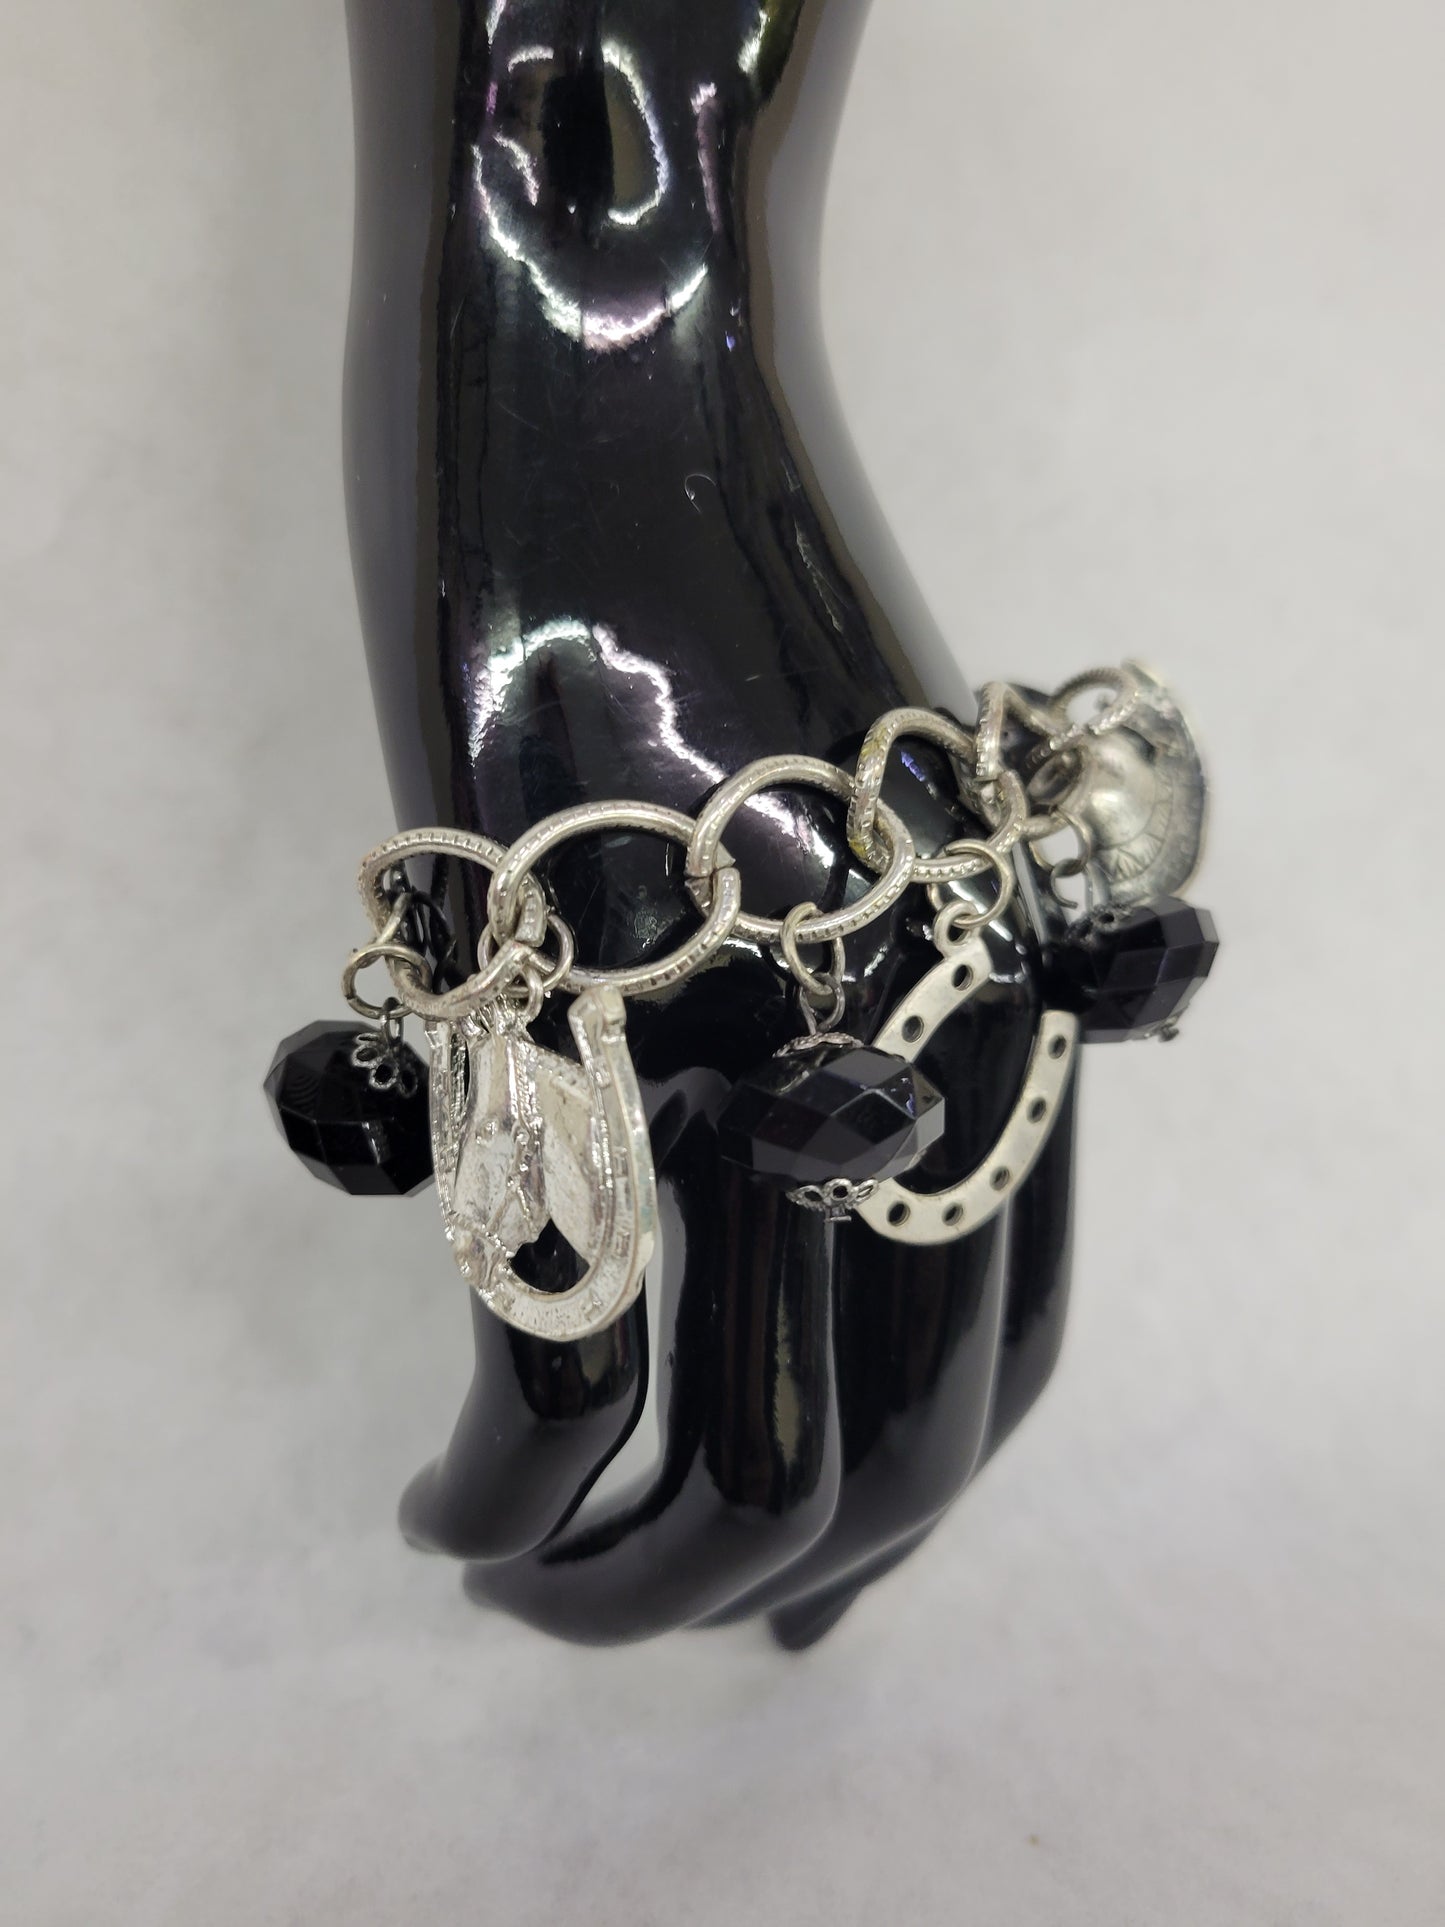 Western Charm Bracelet With Black Beads